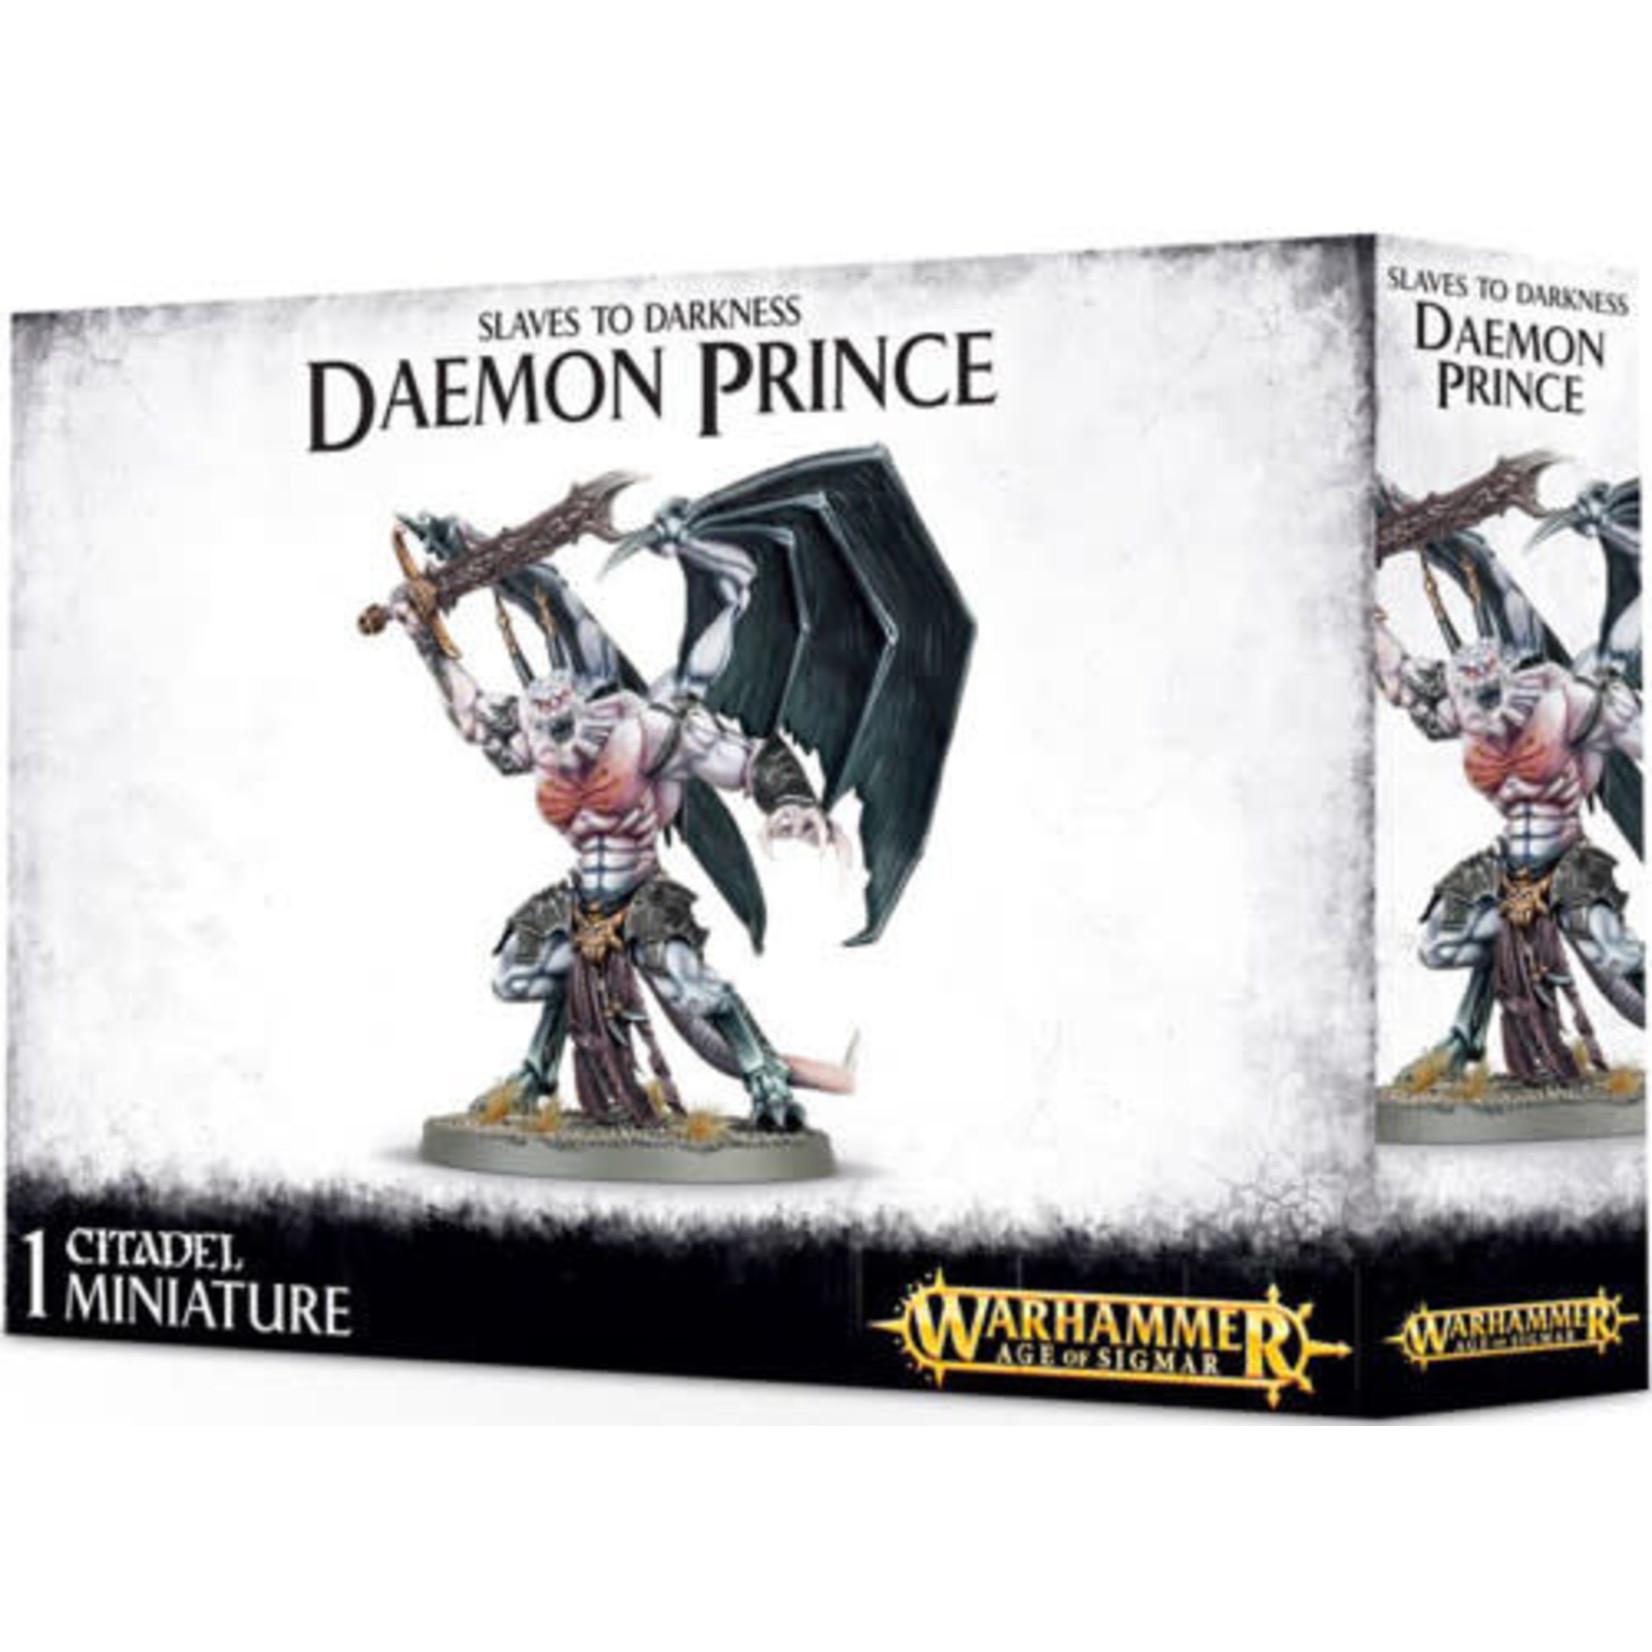 Games Workshop Warhammer Age of Sigmar: Slaves to Darkness - Daemon Prince